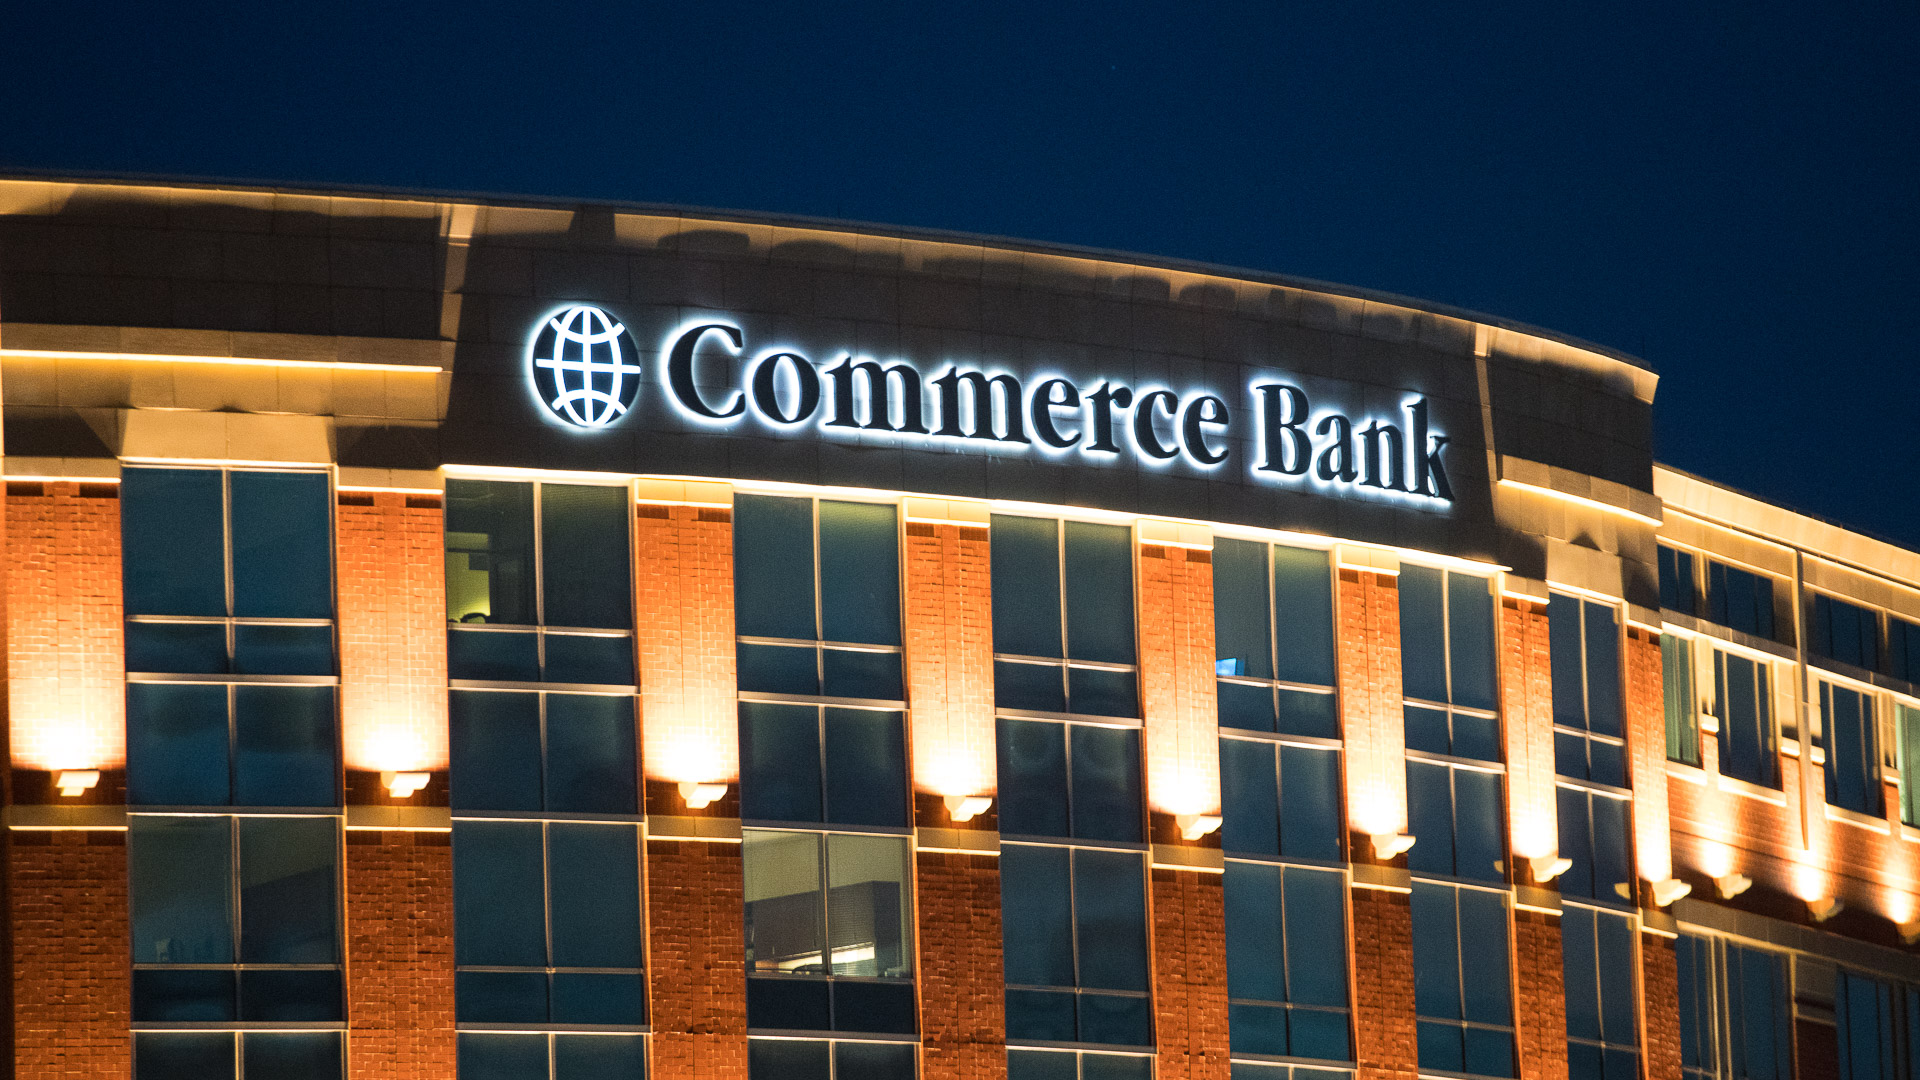 Commerce Bank building